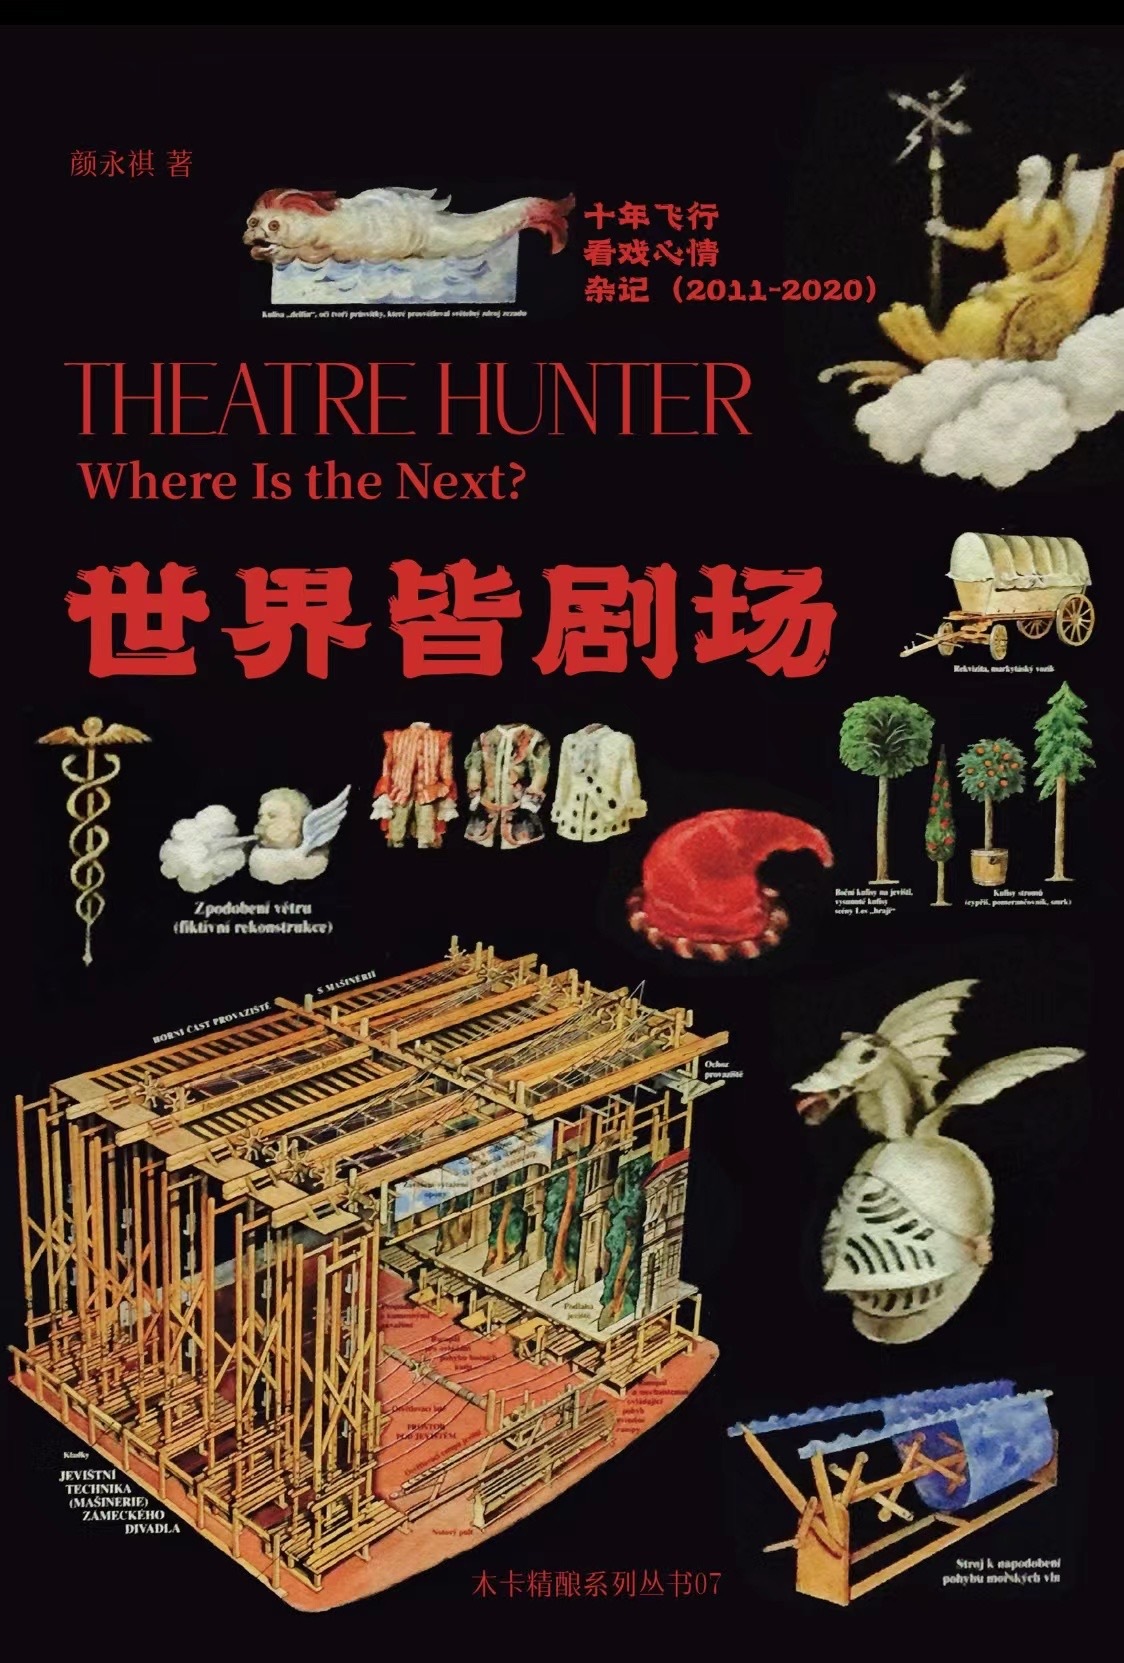 世界皆剧场 Theatre Hunter: Where Is The Next?